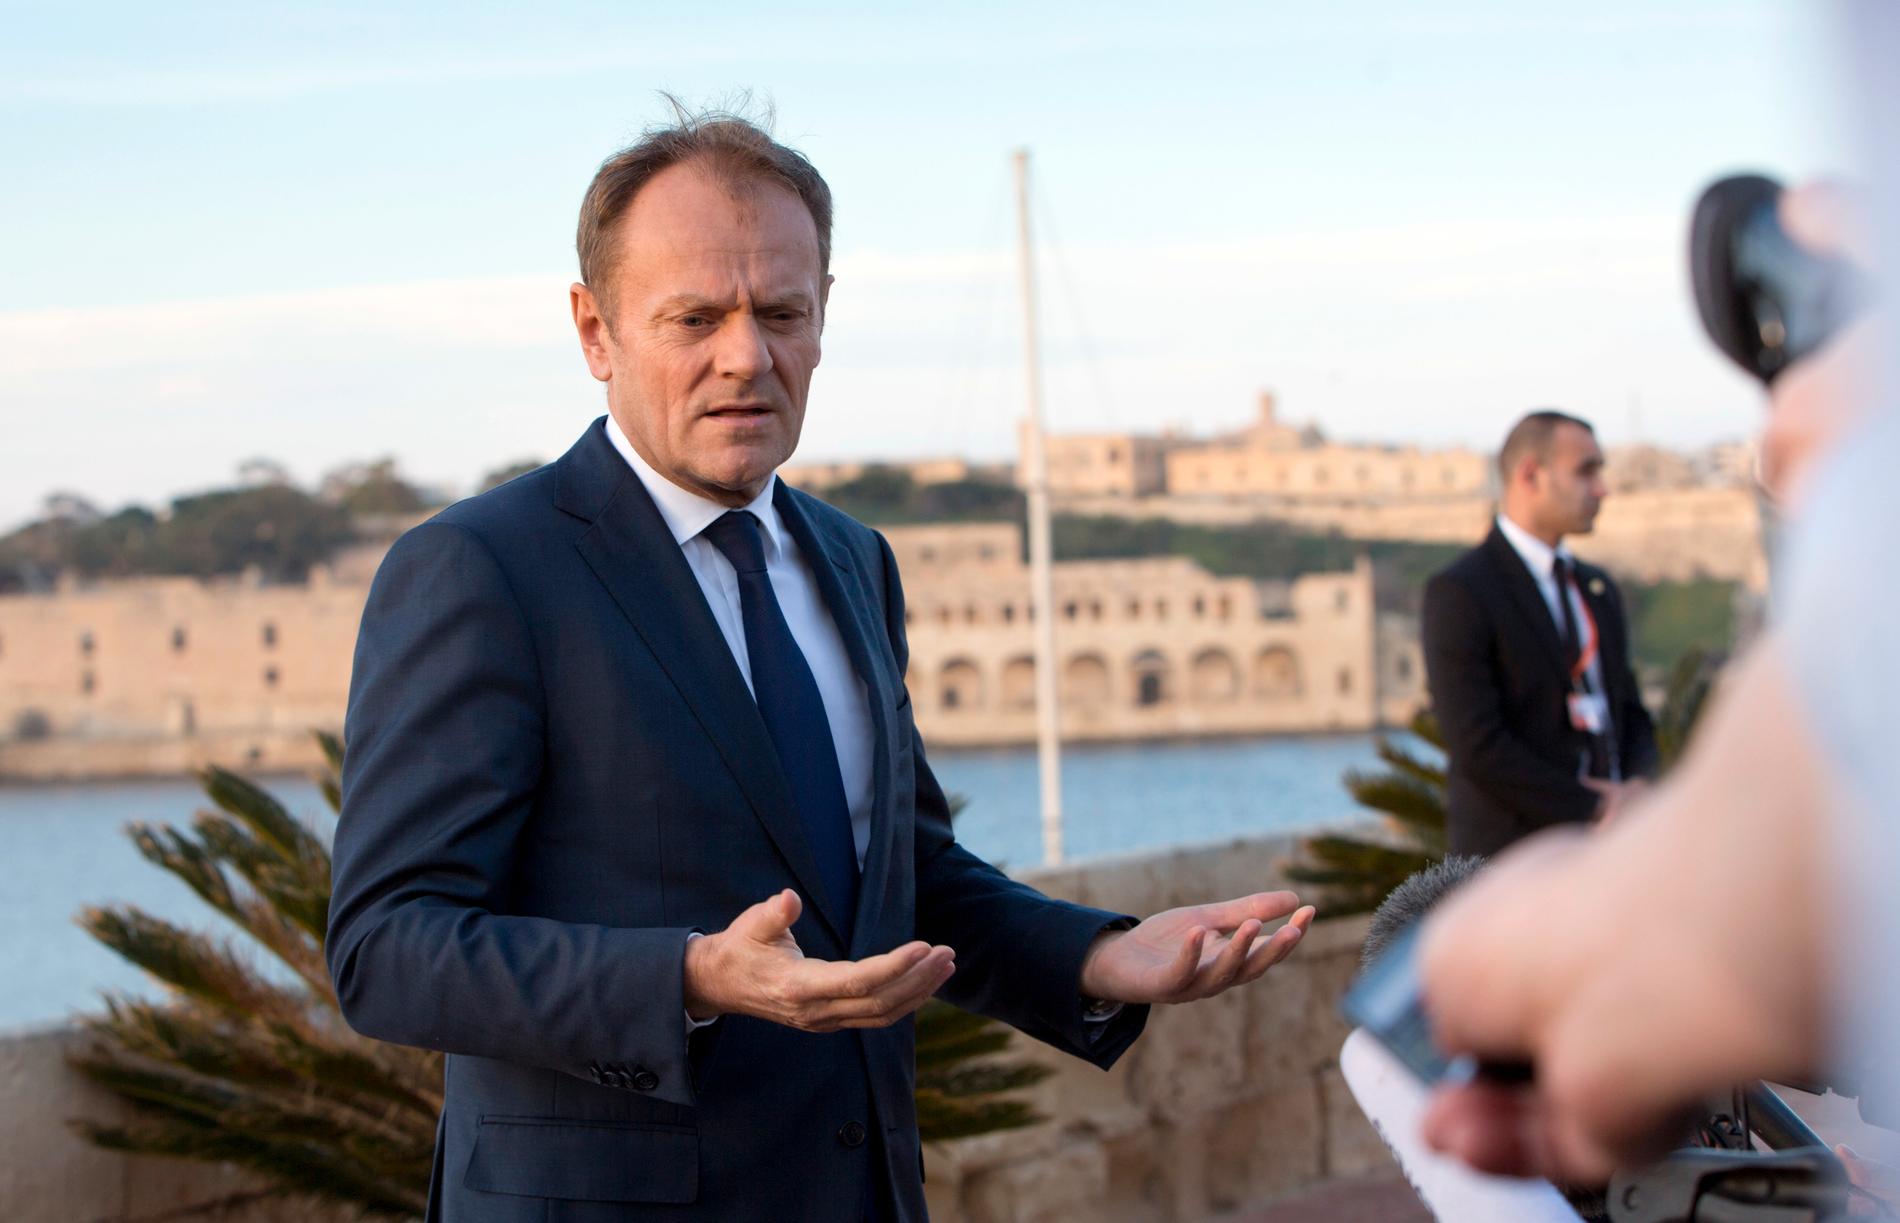 EU:s permanente rådsordförande Donald Tusk i Malta i går.